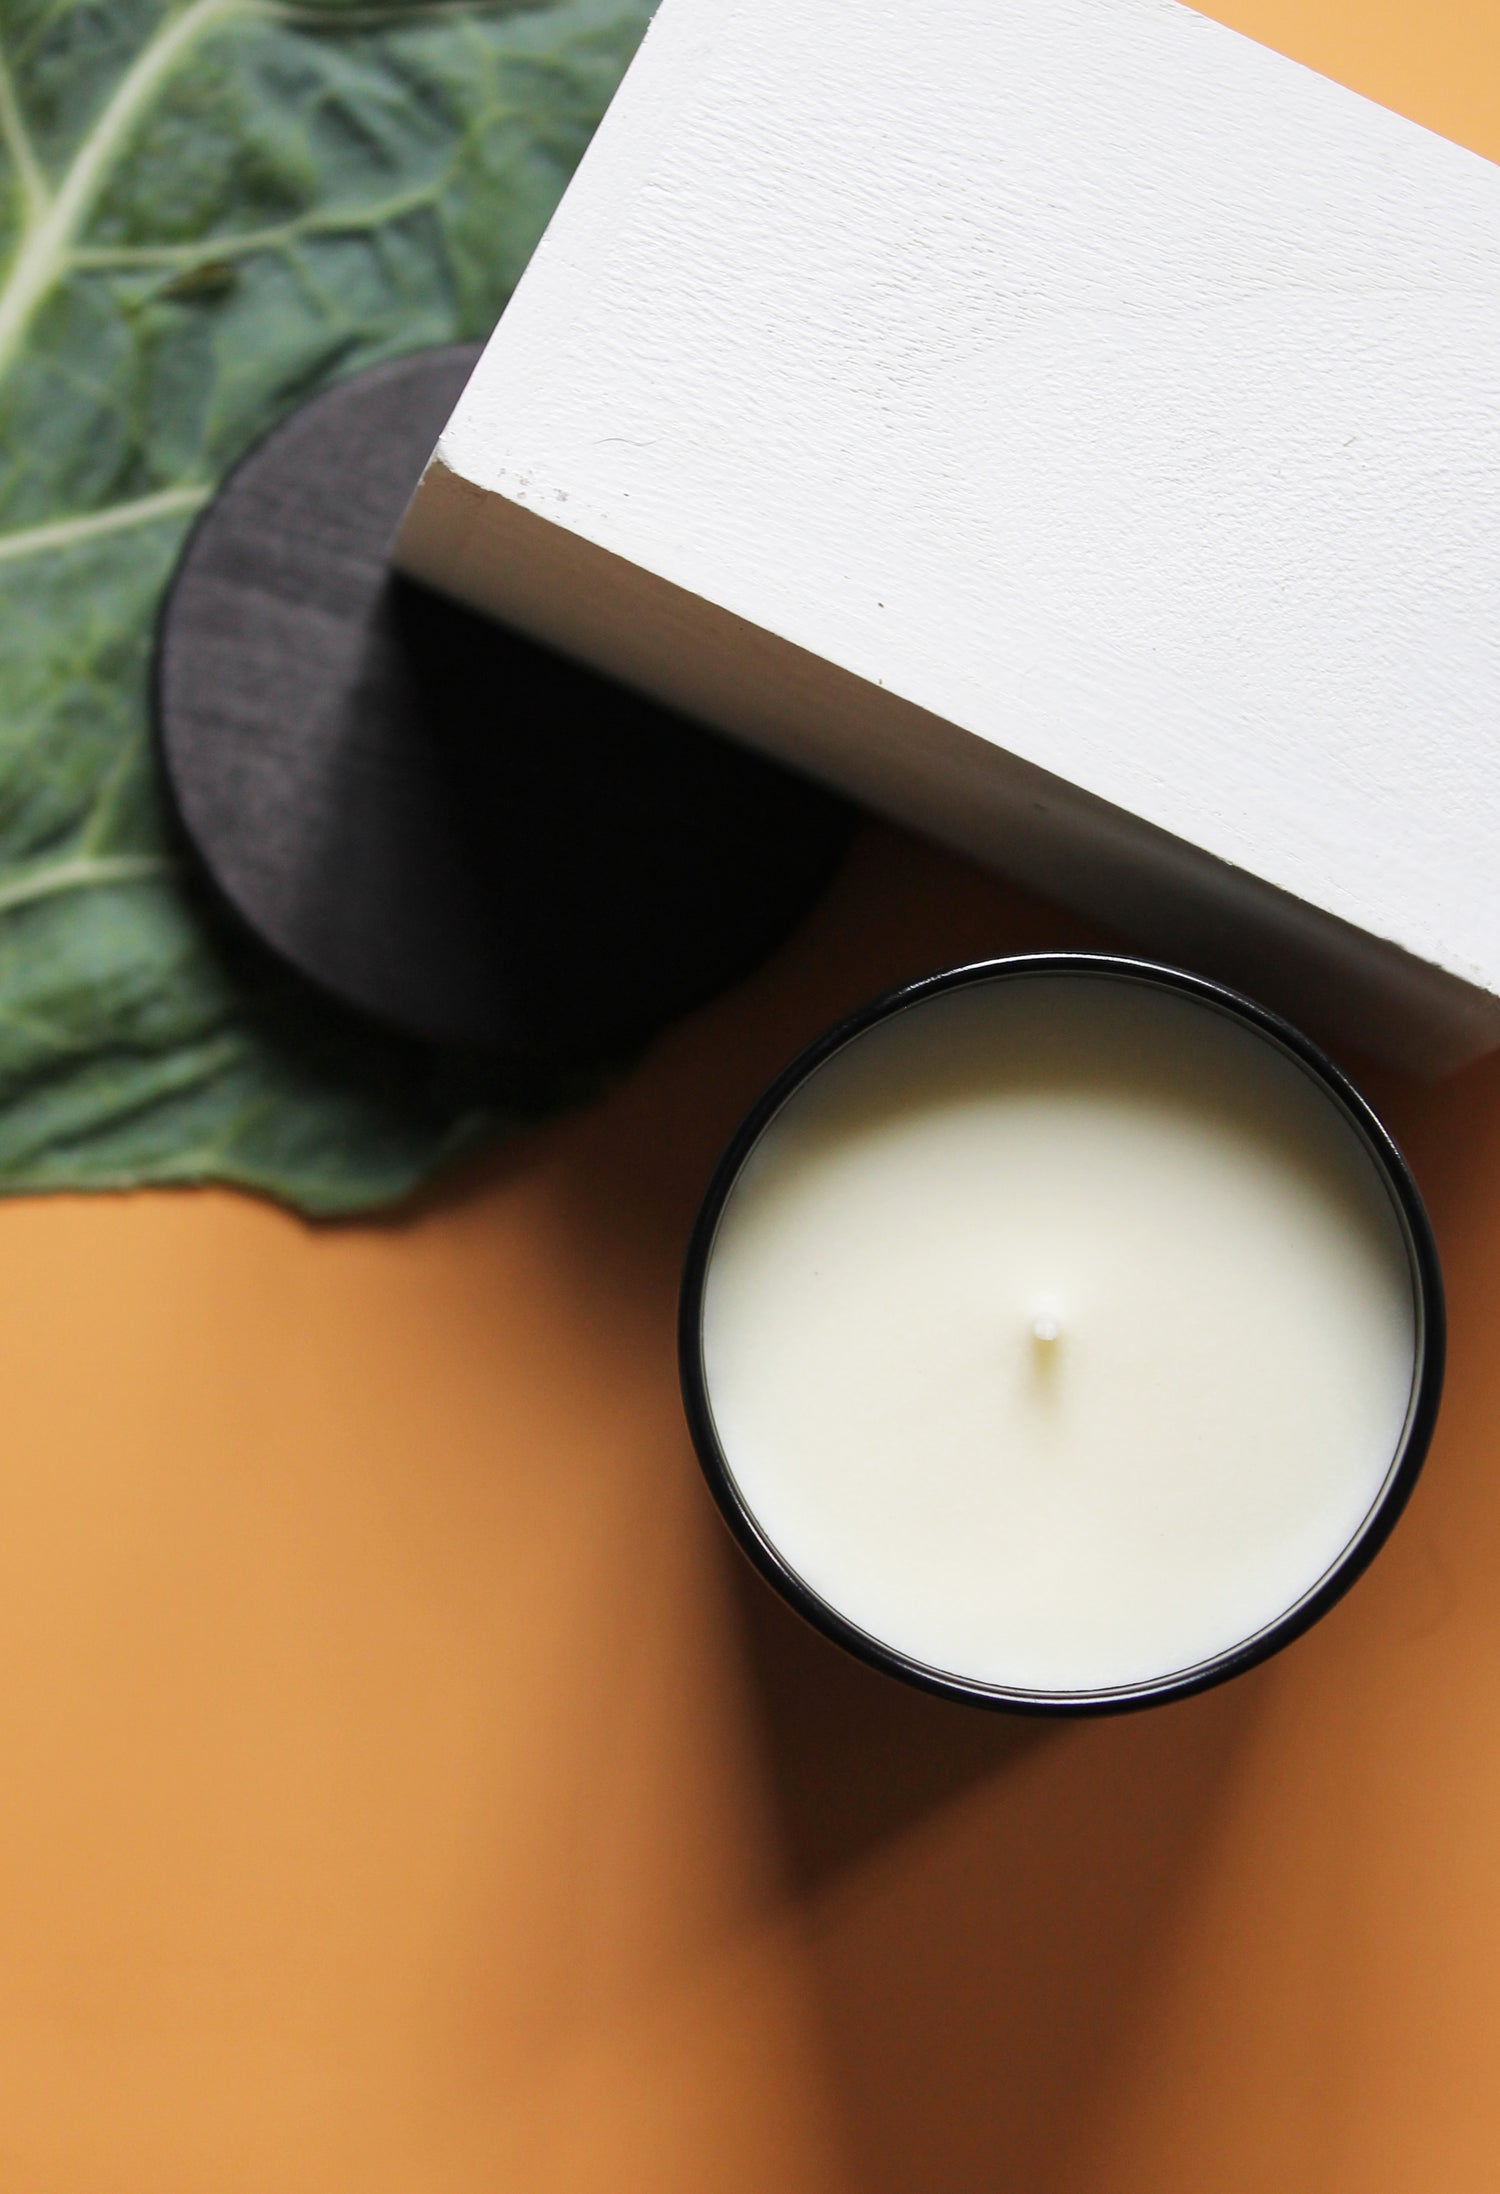 Cereria Molla Basil & Mandarin Candle – Pro Beauty